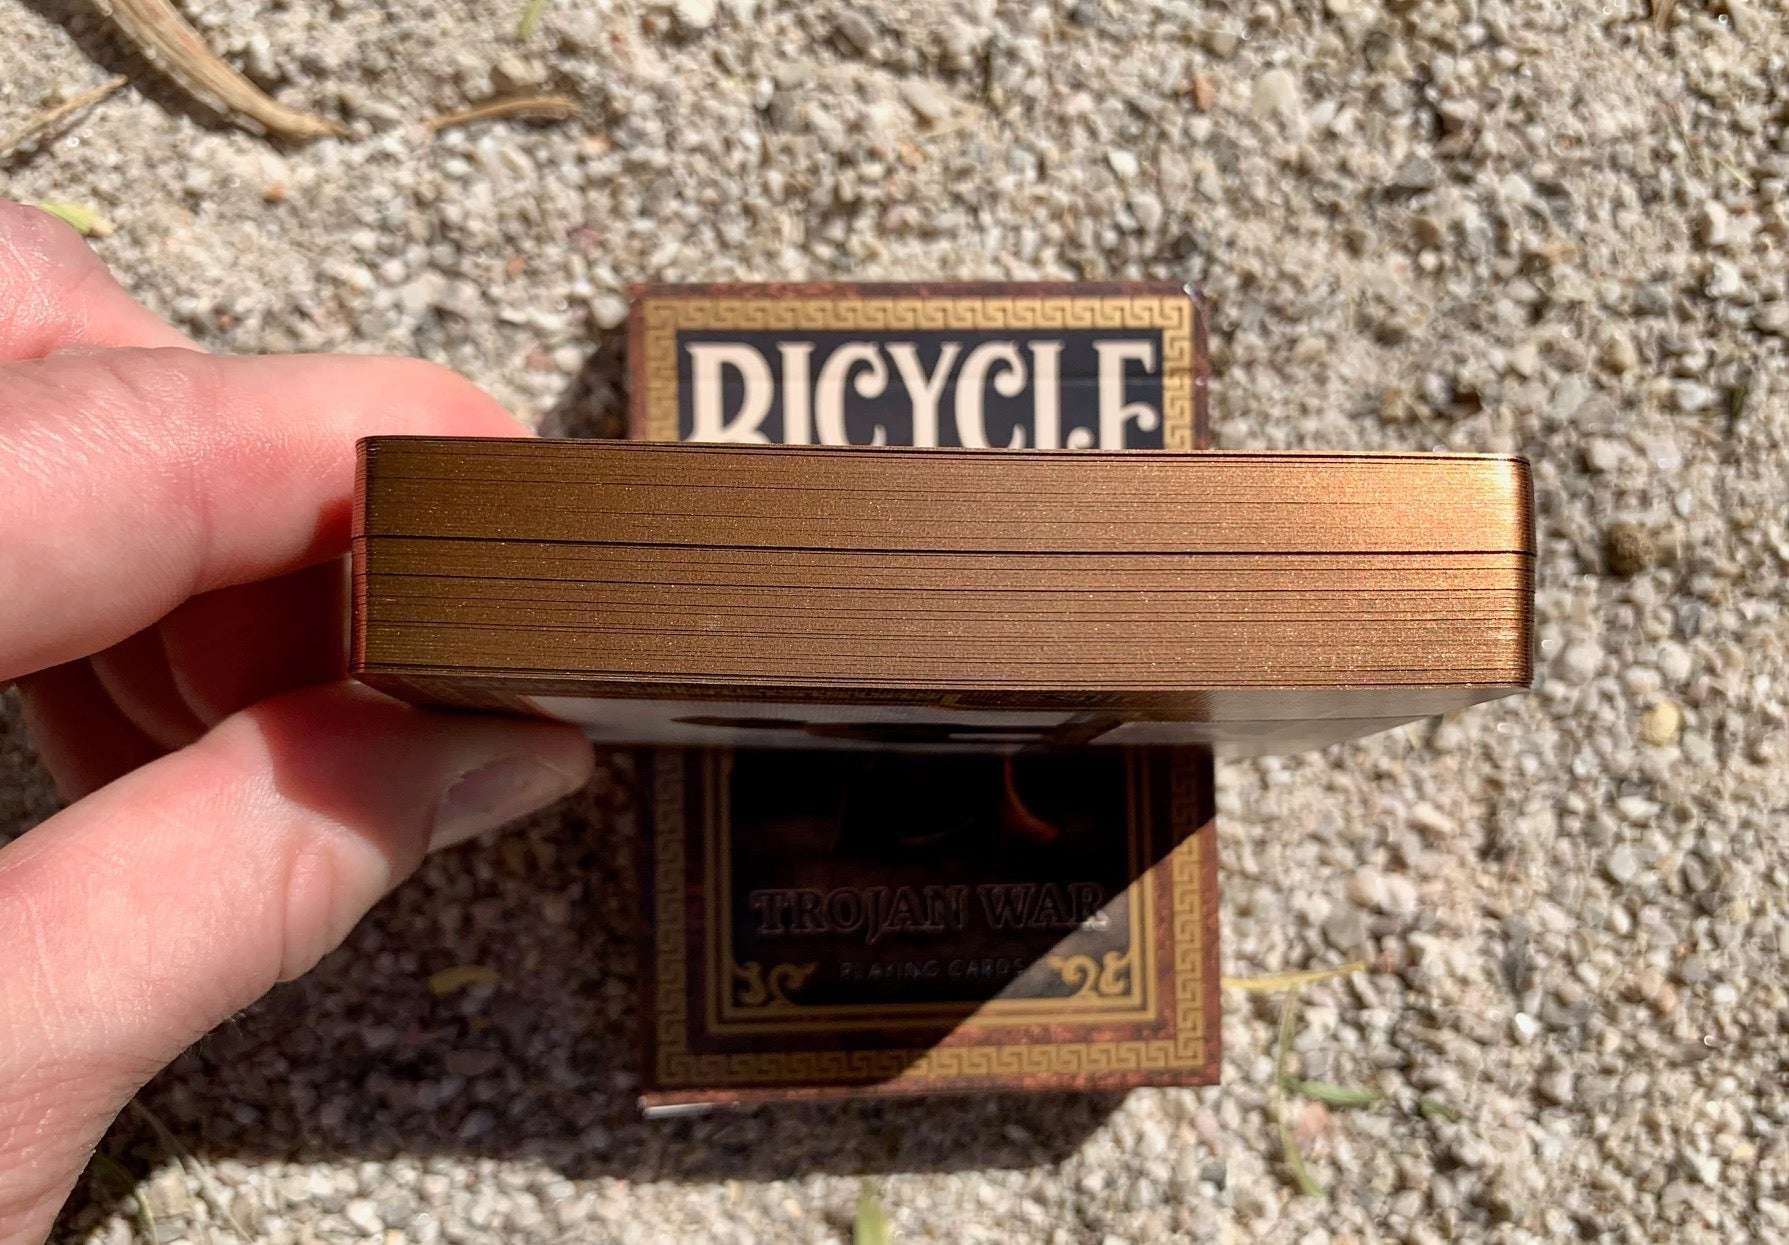 PlayingCardDecks.com-Trojan War Gilded Bicycle Playing Cards